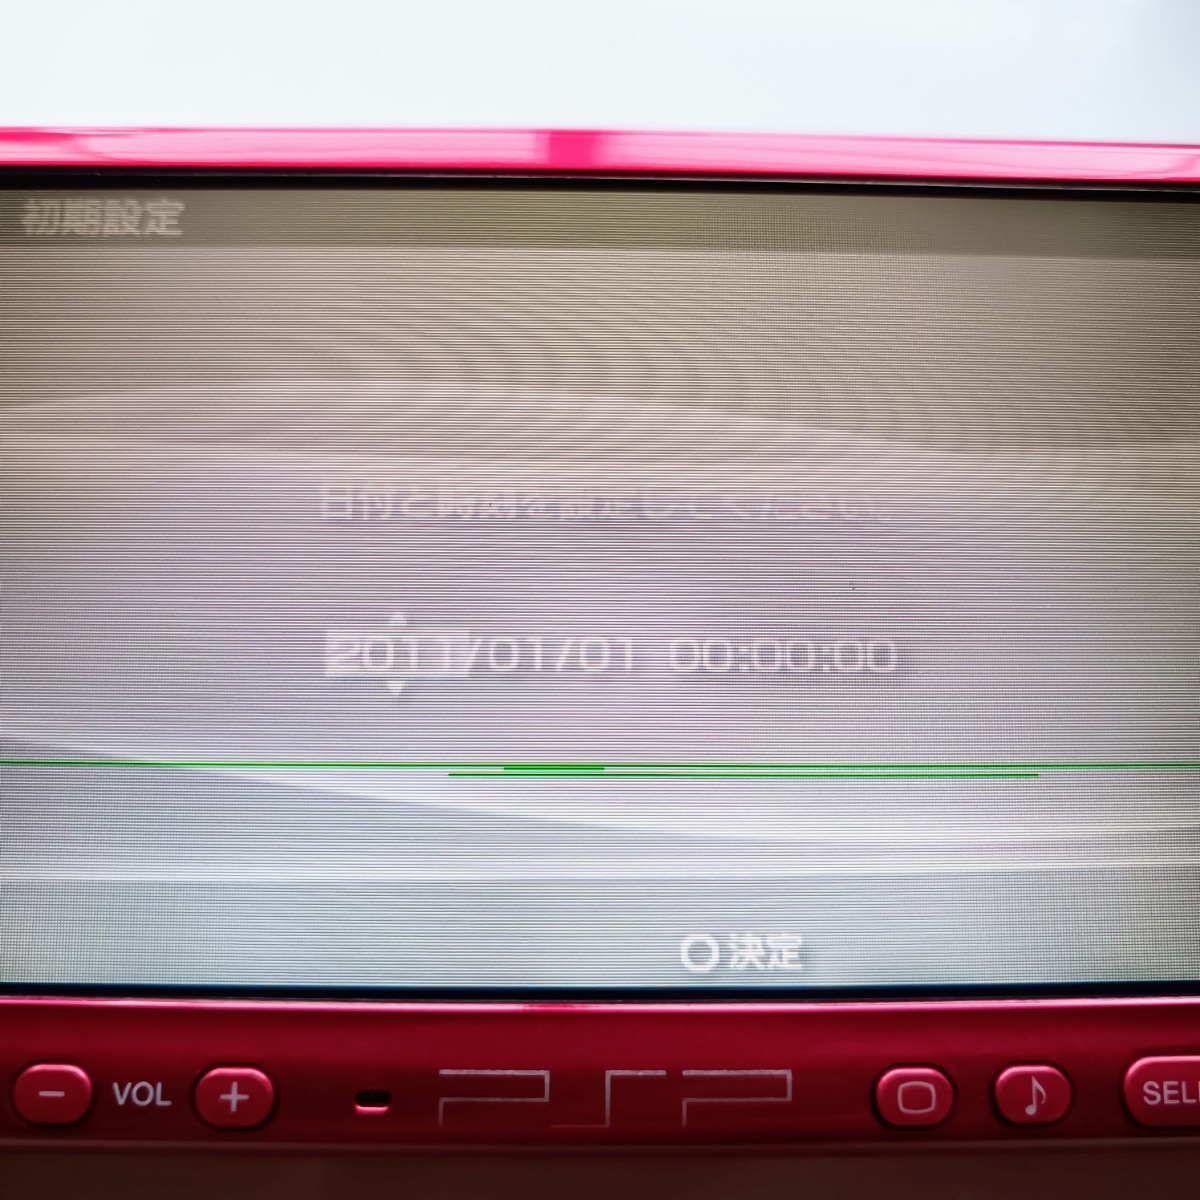 PSP3000 レッド ソフト20本 アダプタ 付きセット 【ワケあり】